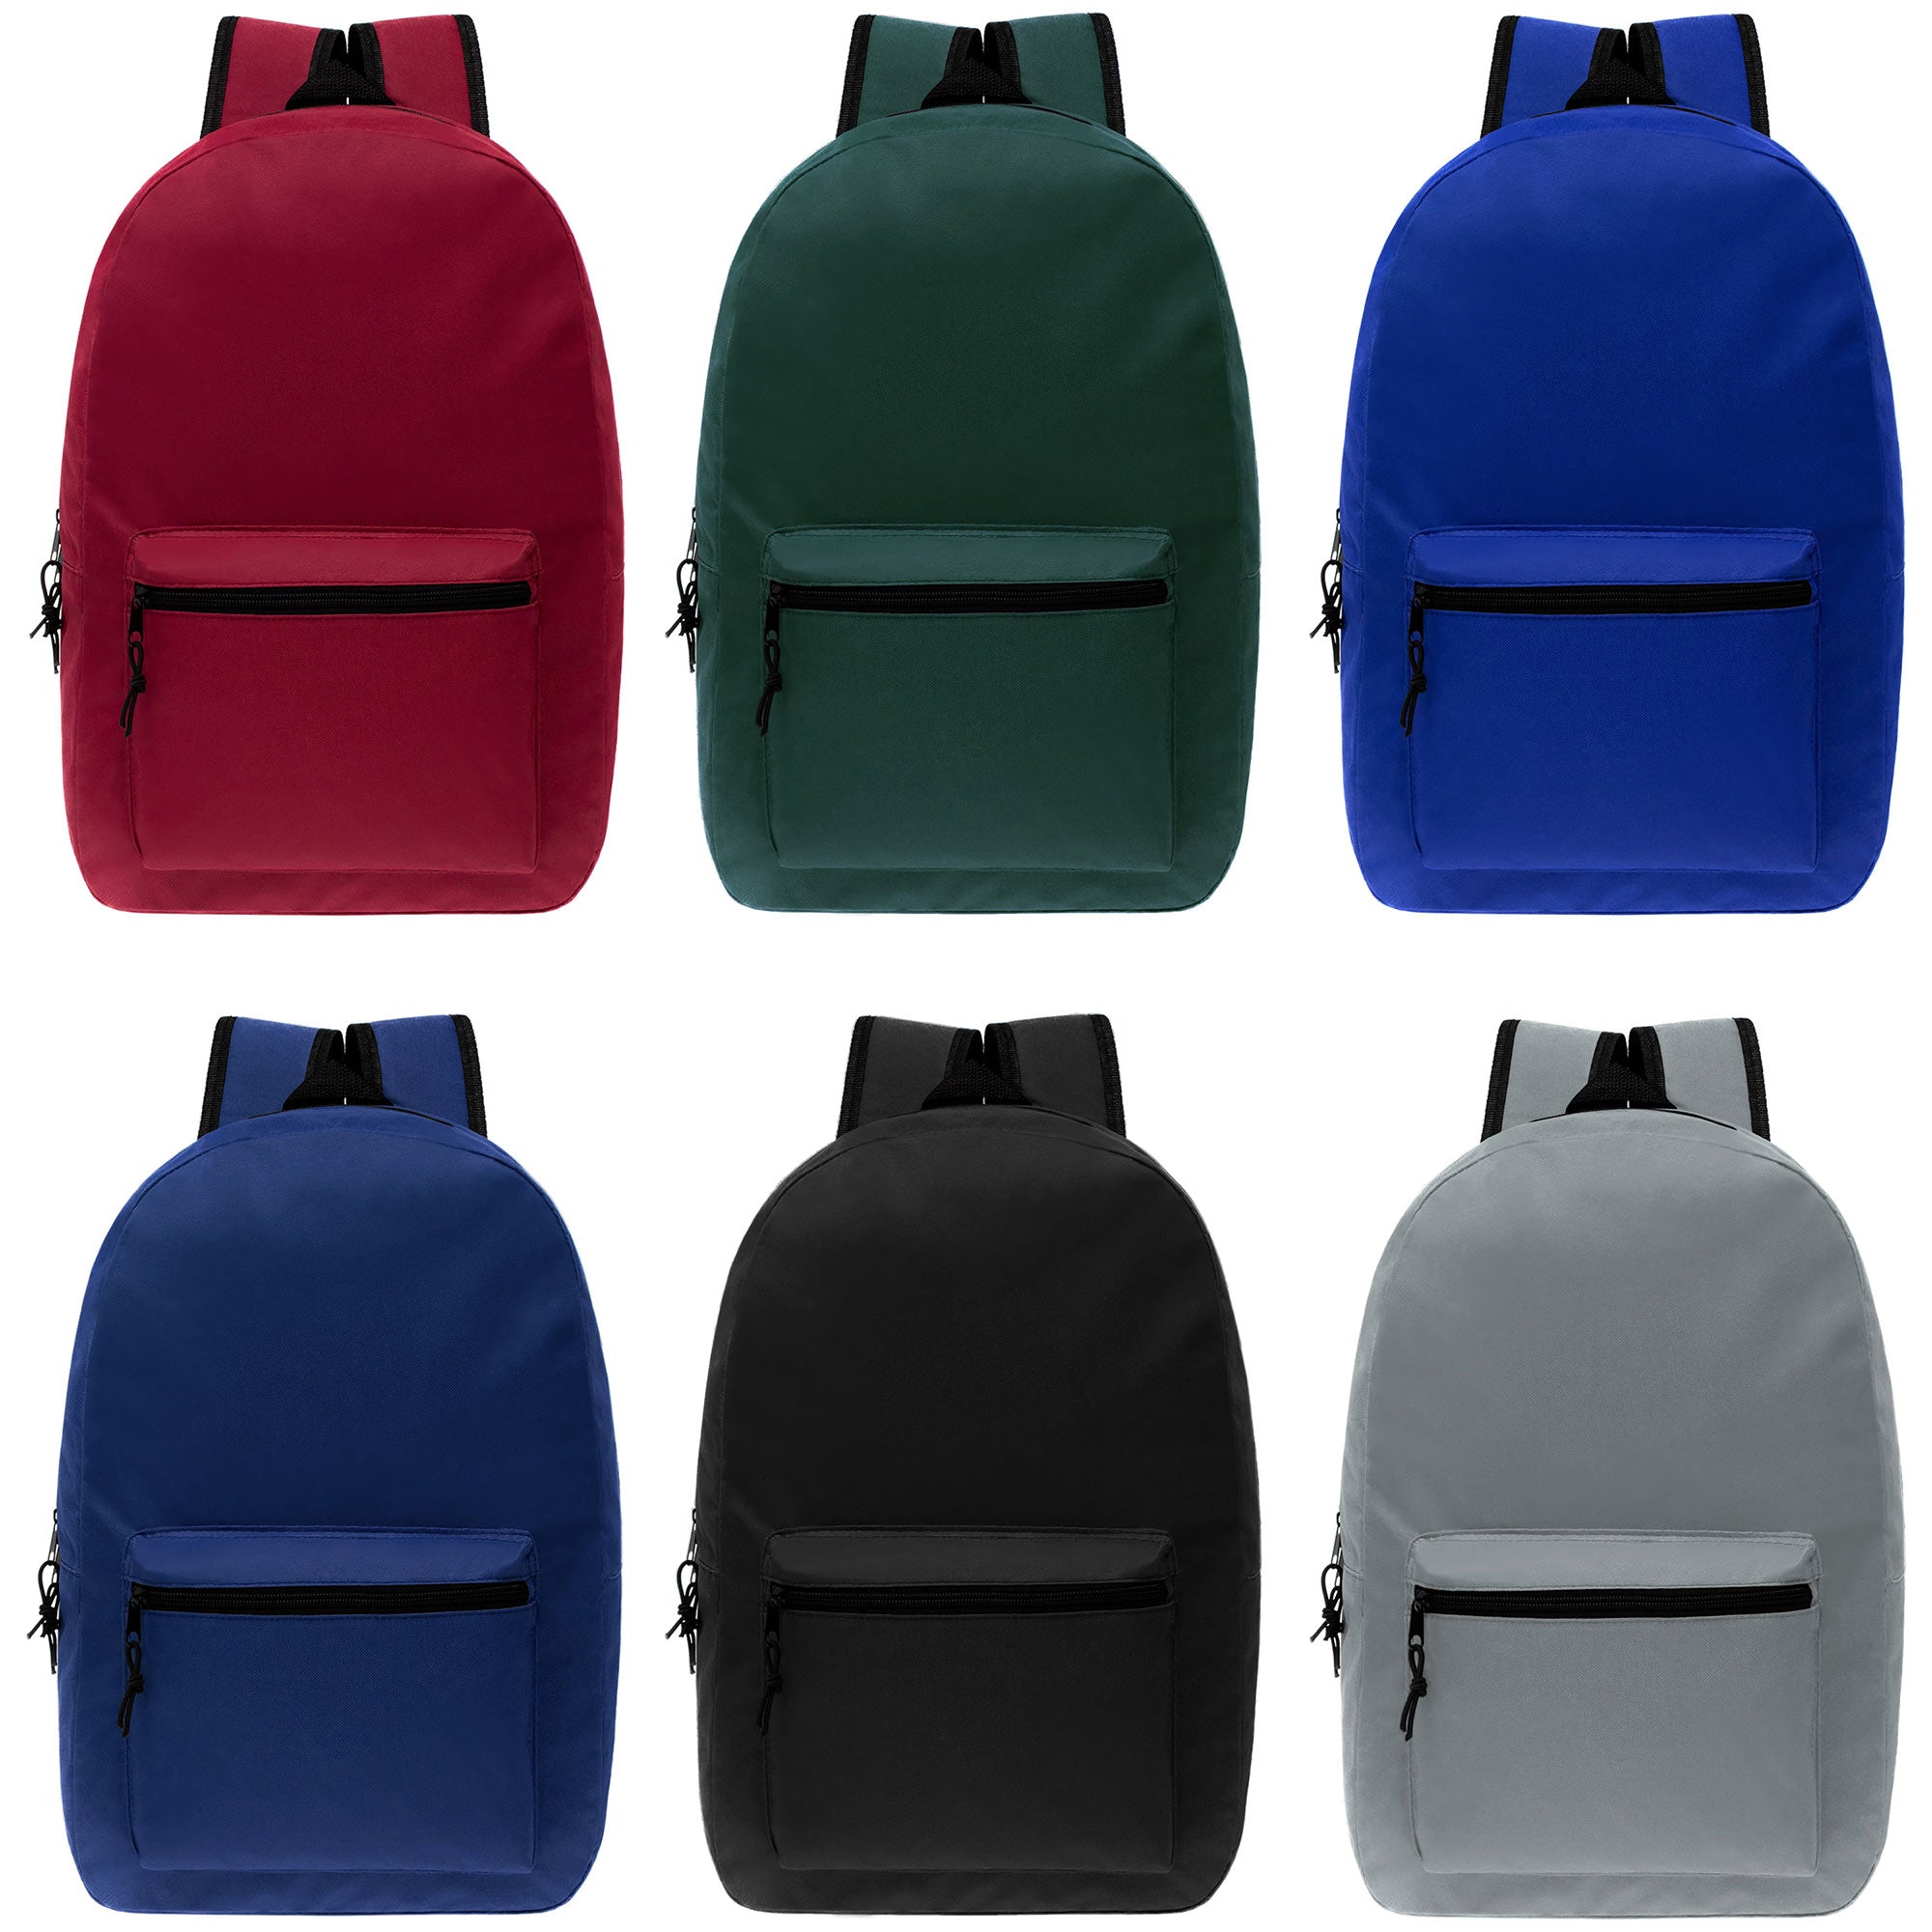 15 inch wholesale backpacks in bulk 6 colors